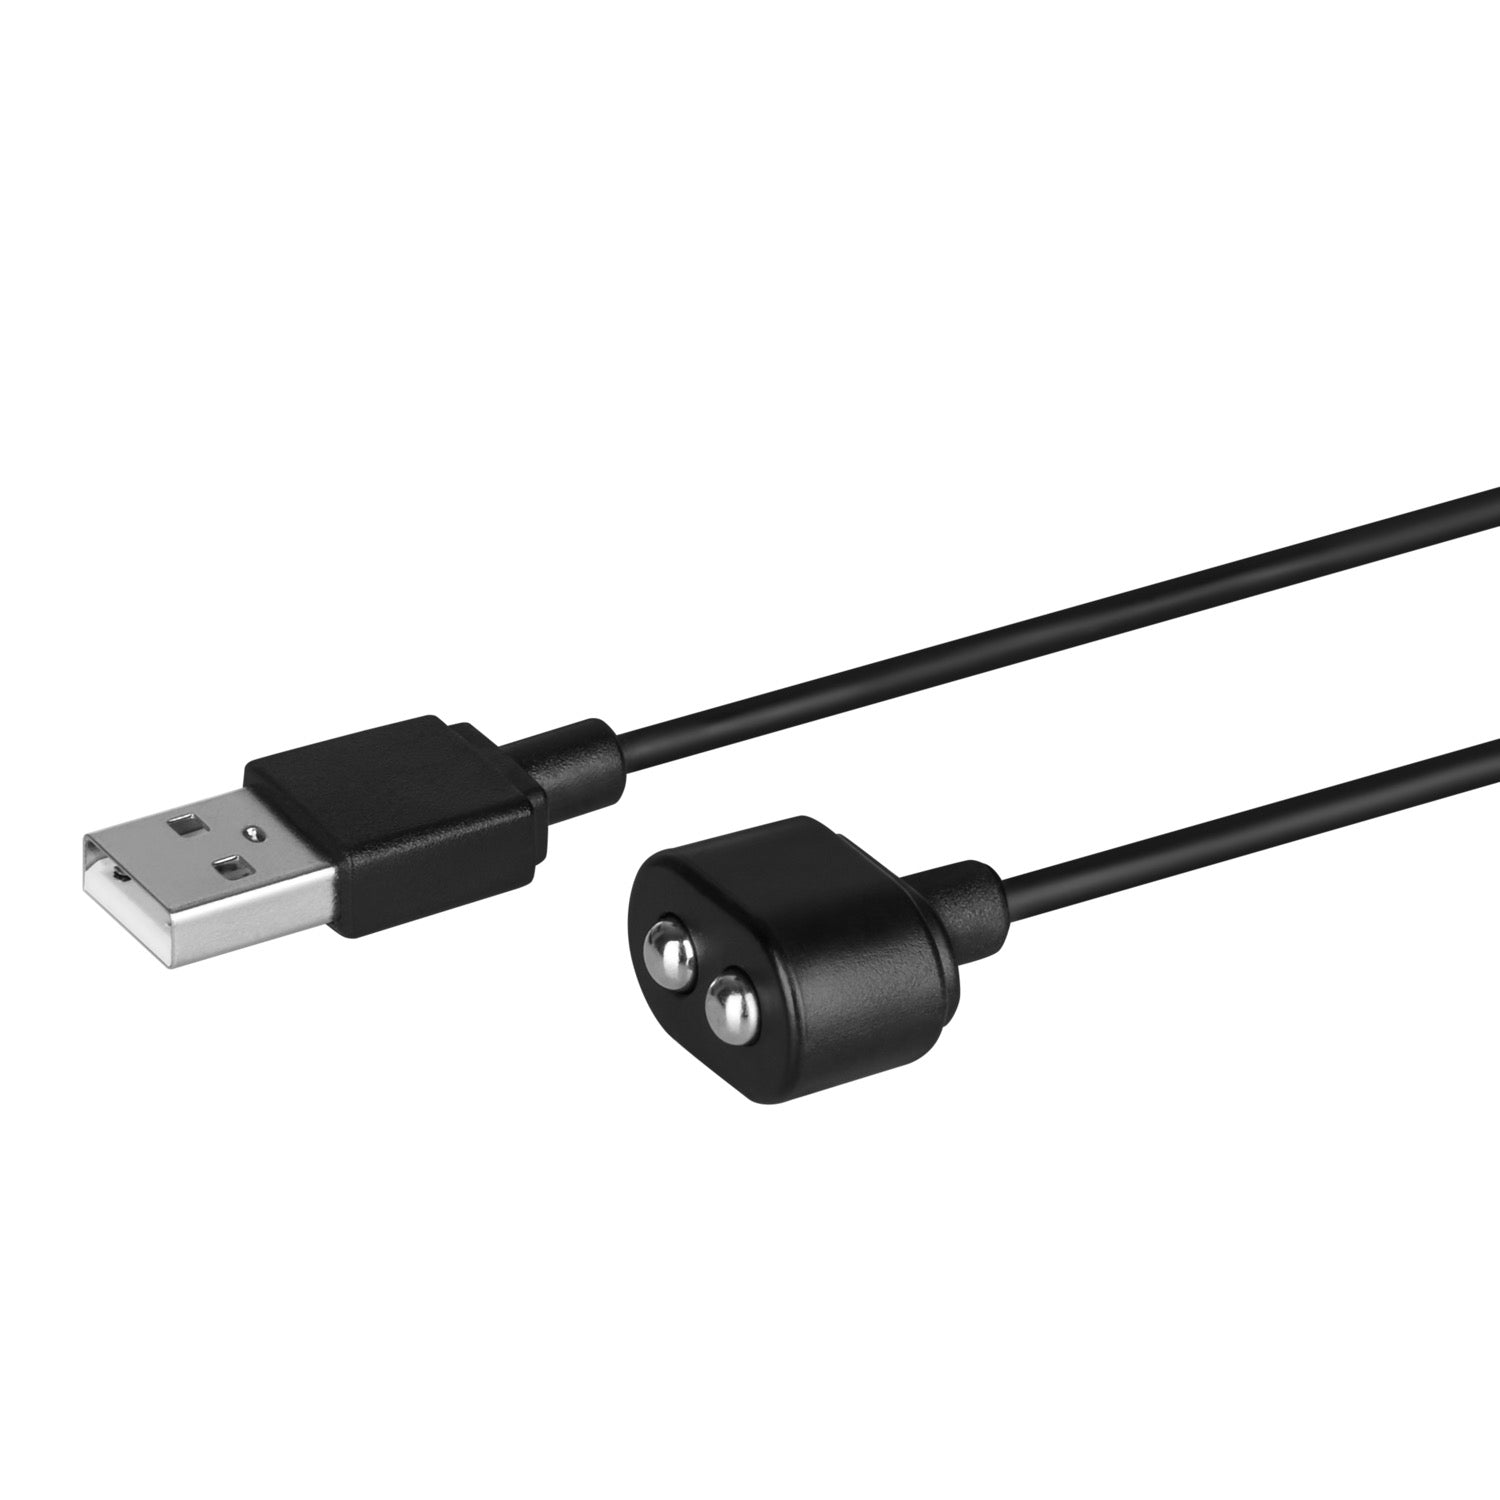 Satisfyer USB Charging Cable - Black by Satisfyer